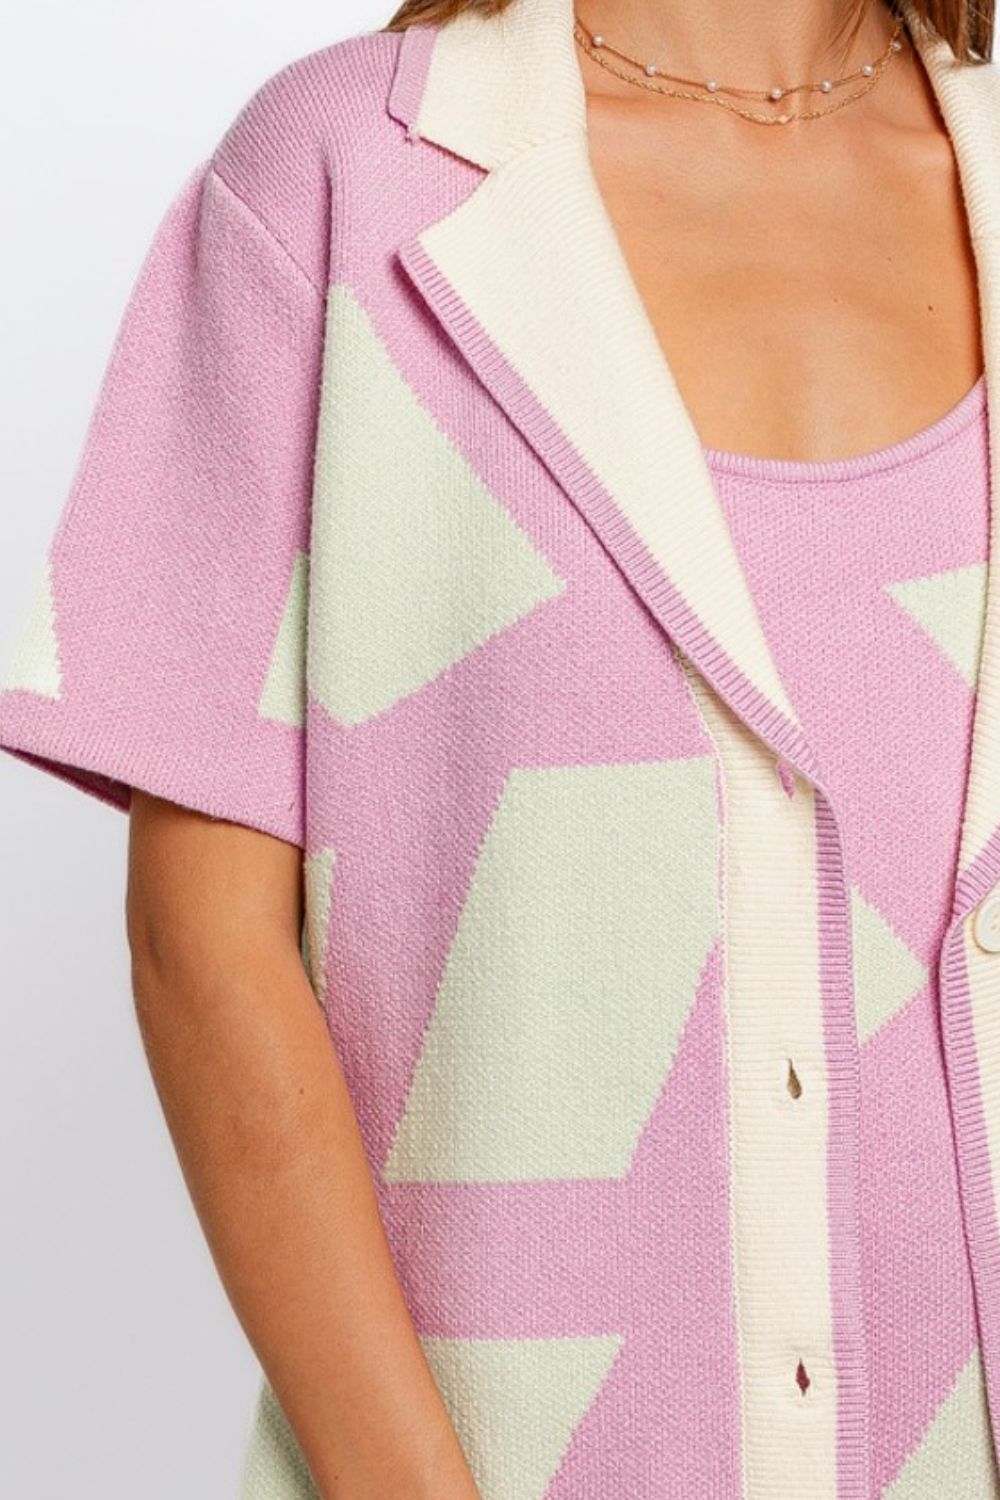 TEEK - Pink Mint Abstract Contrast Short Sleeve Collared Cardigan SWEATER TEEK Trend   